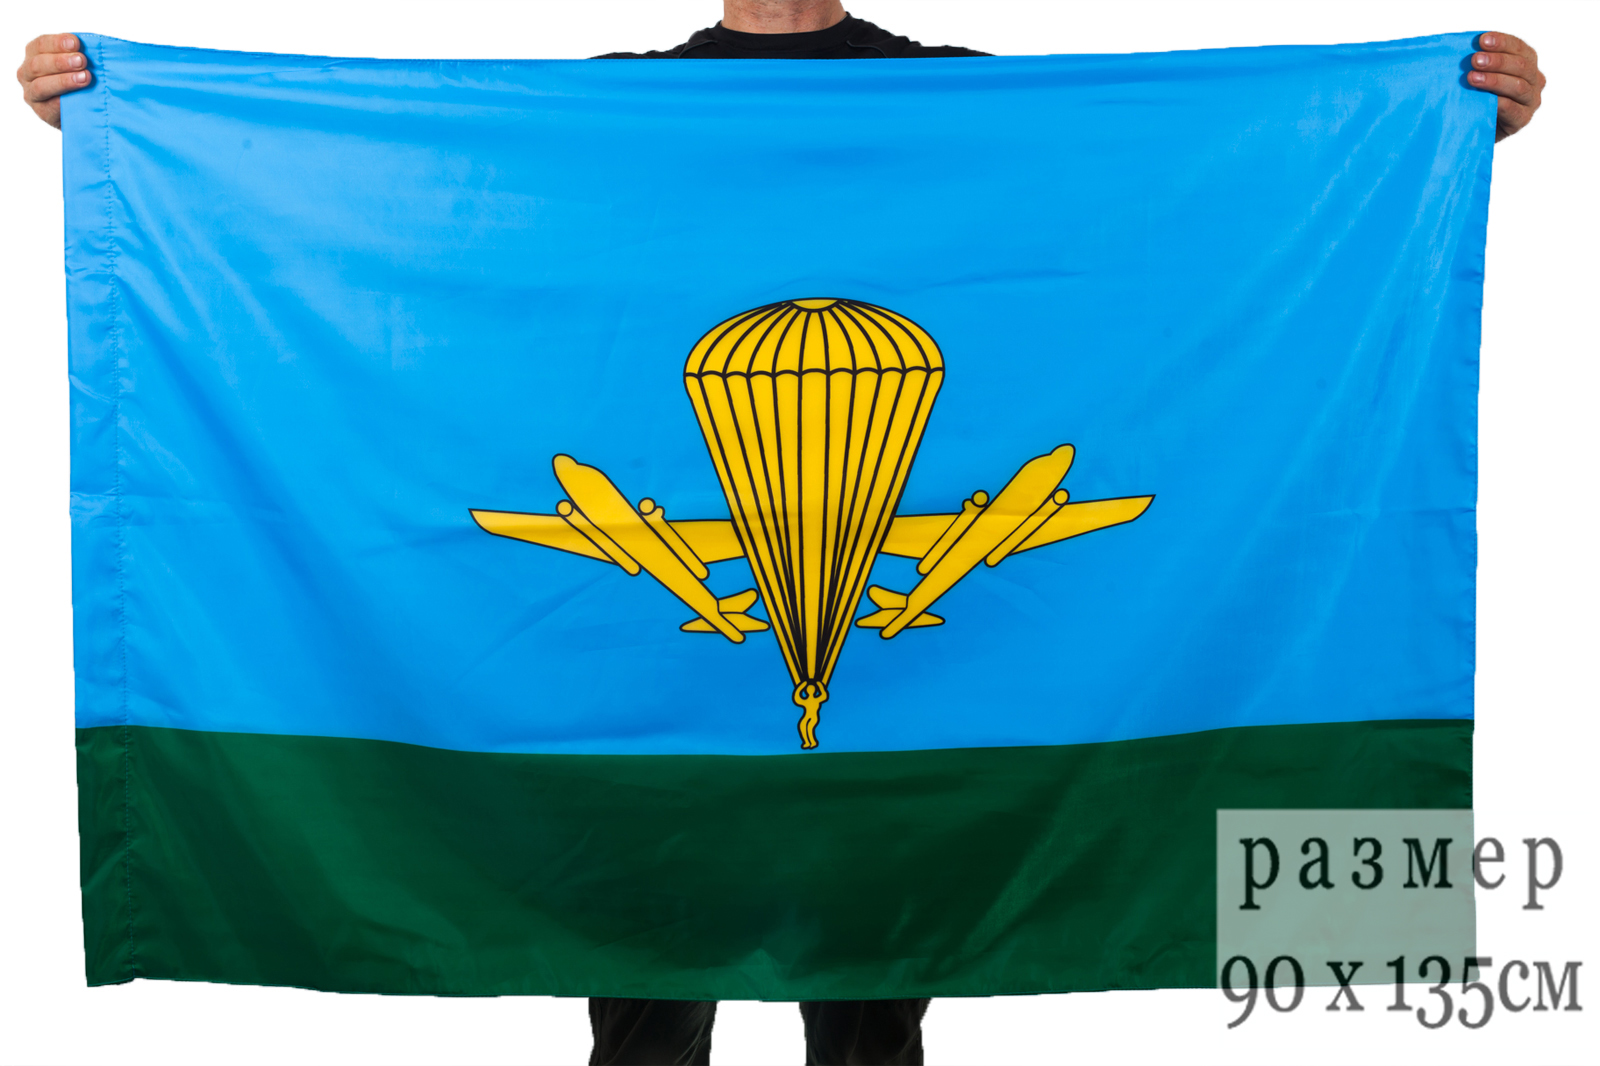 Флаг артиллерийских войск россии фото